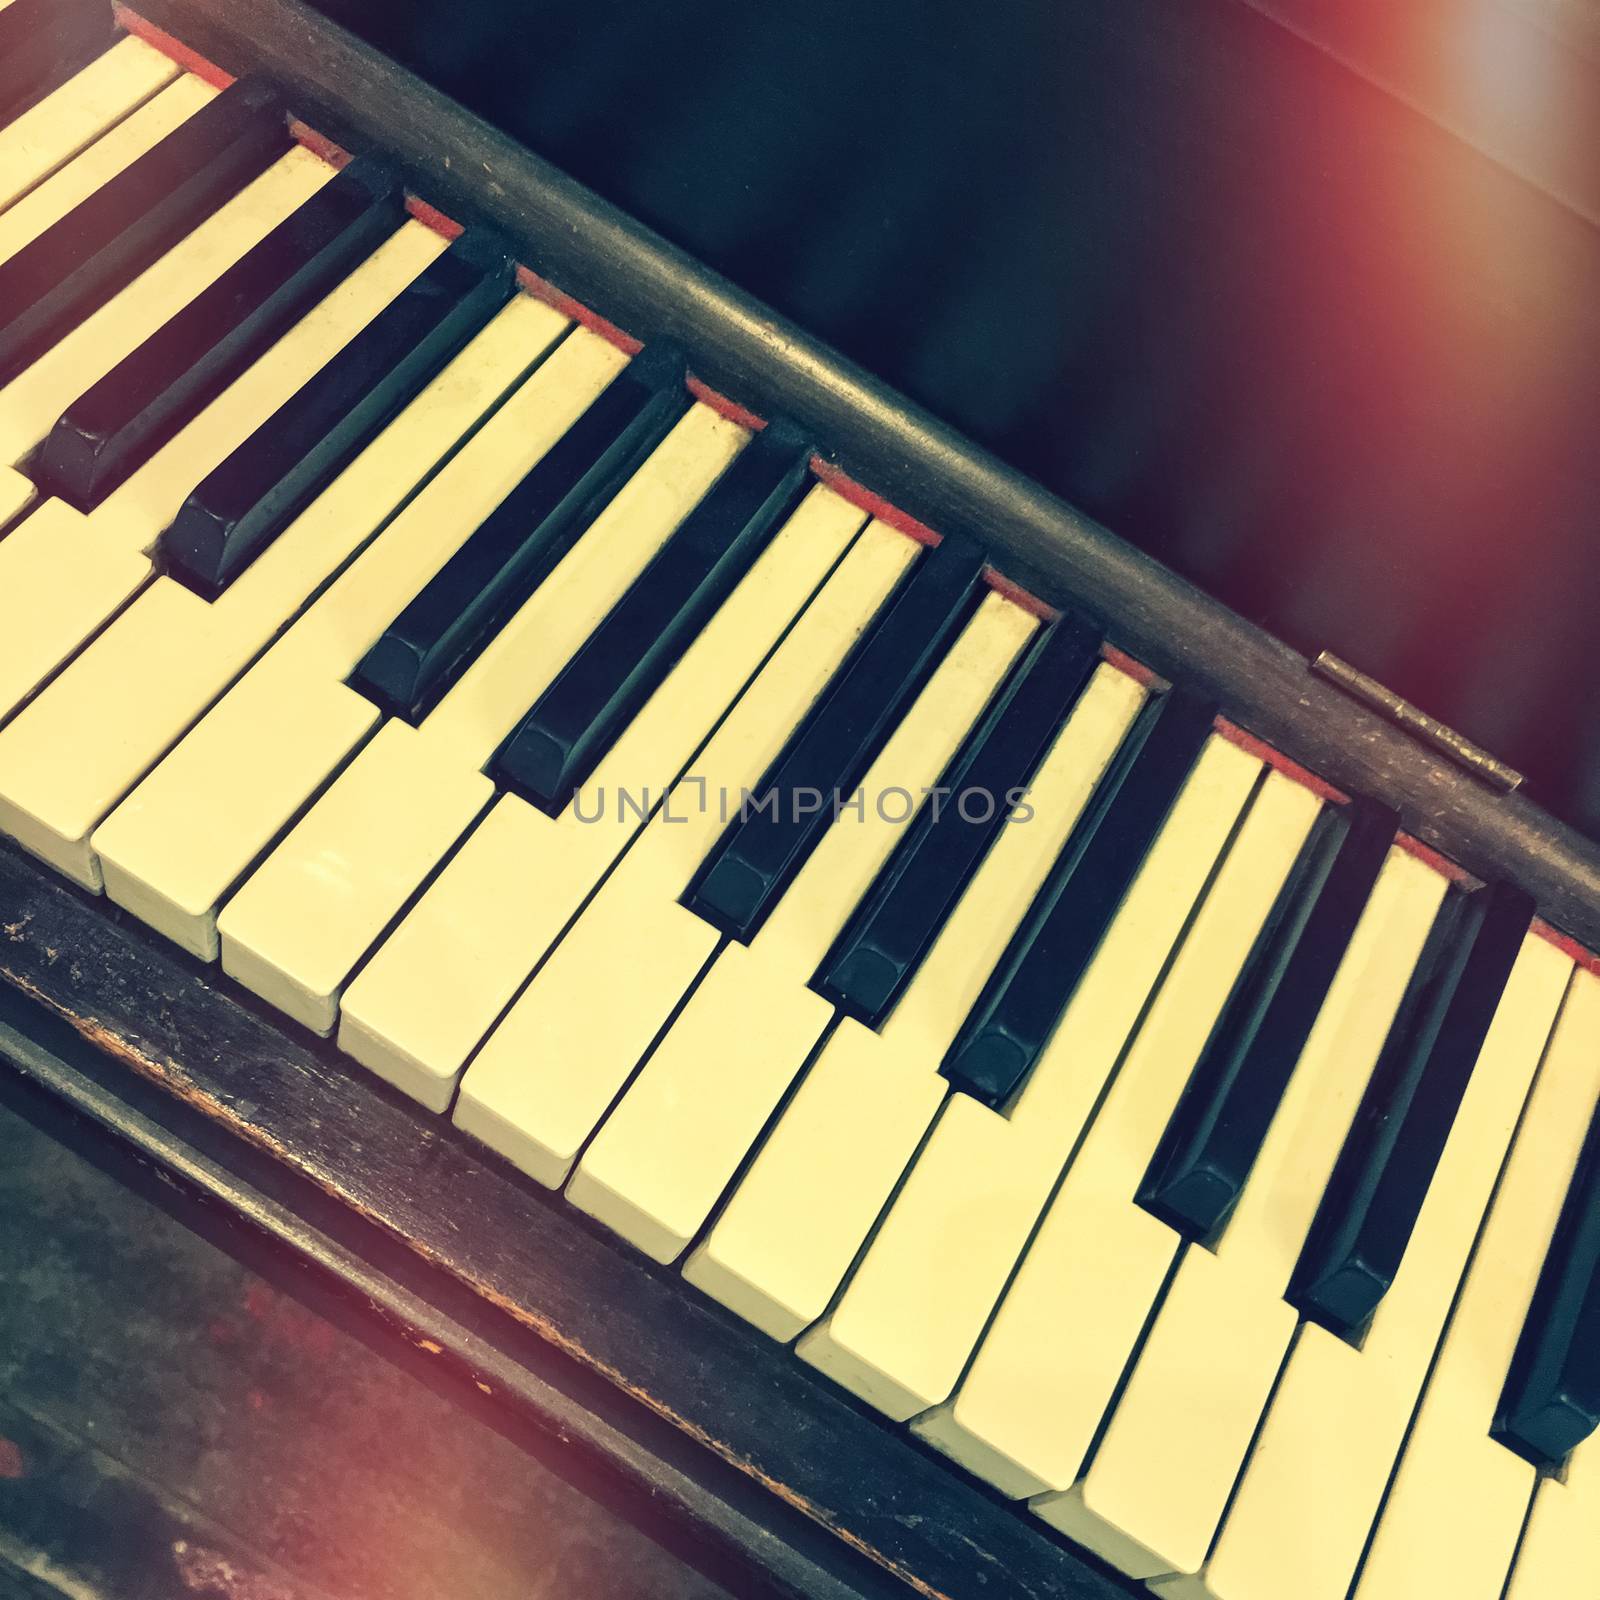 Piano keys. Retro style photo with light leaks.